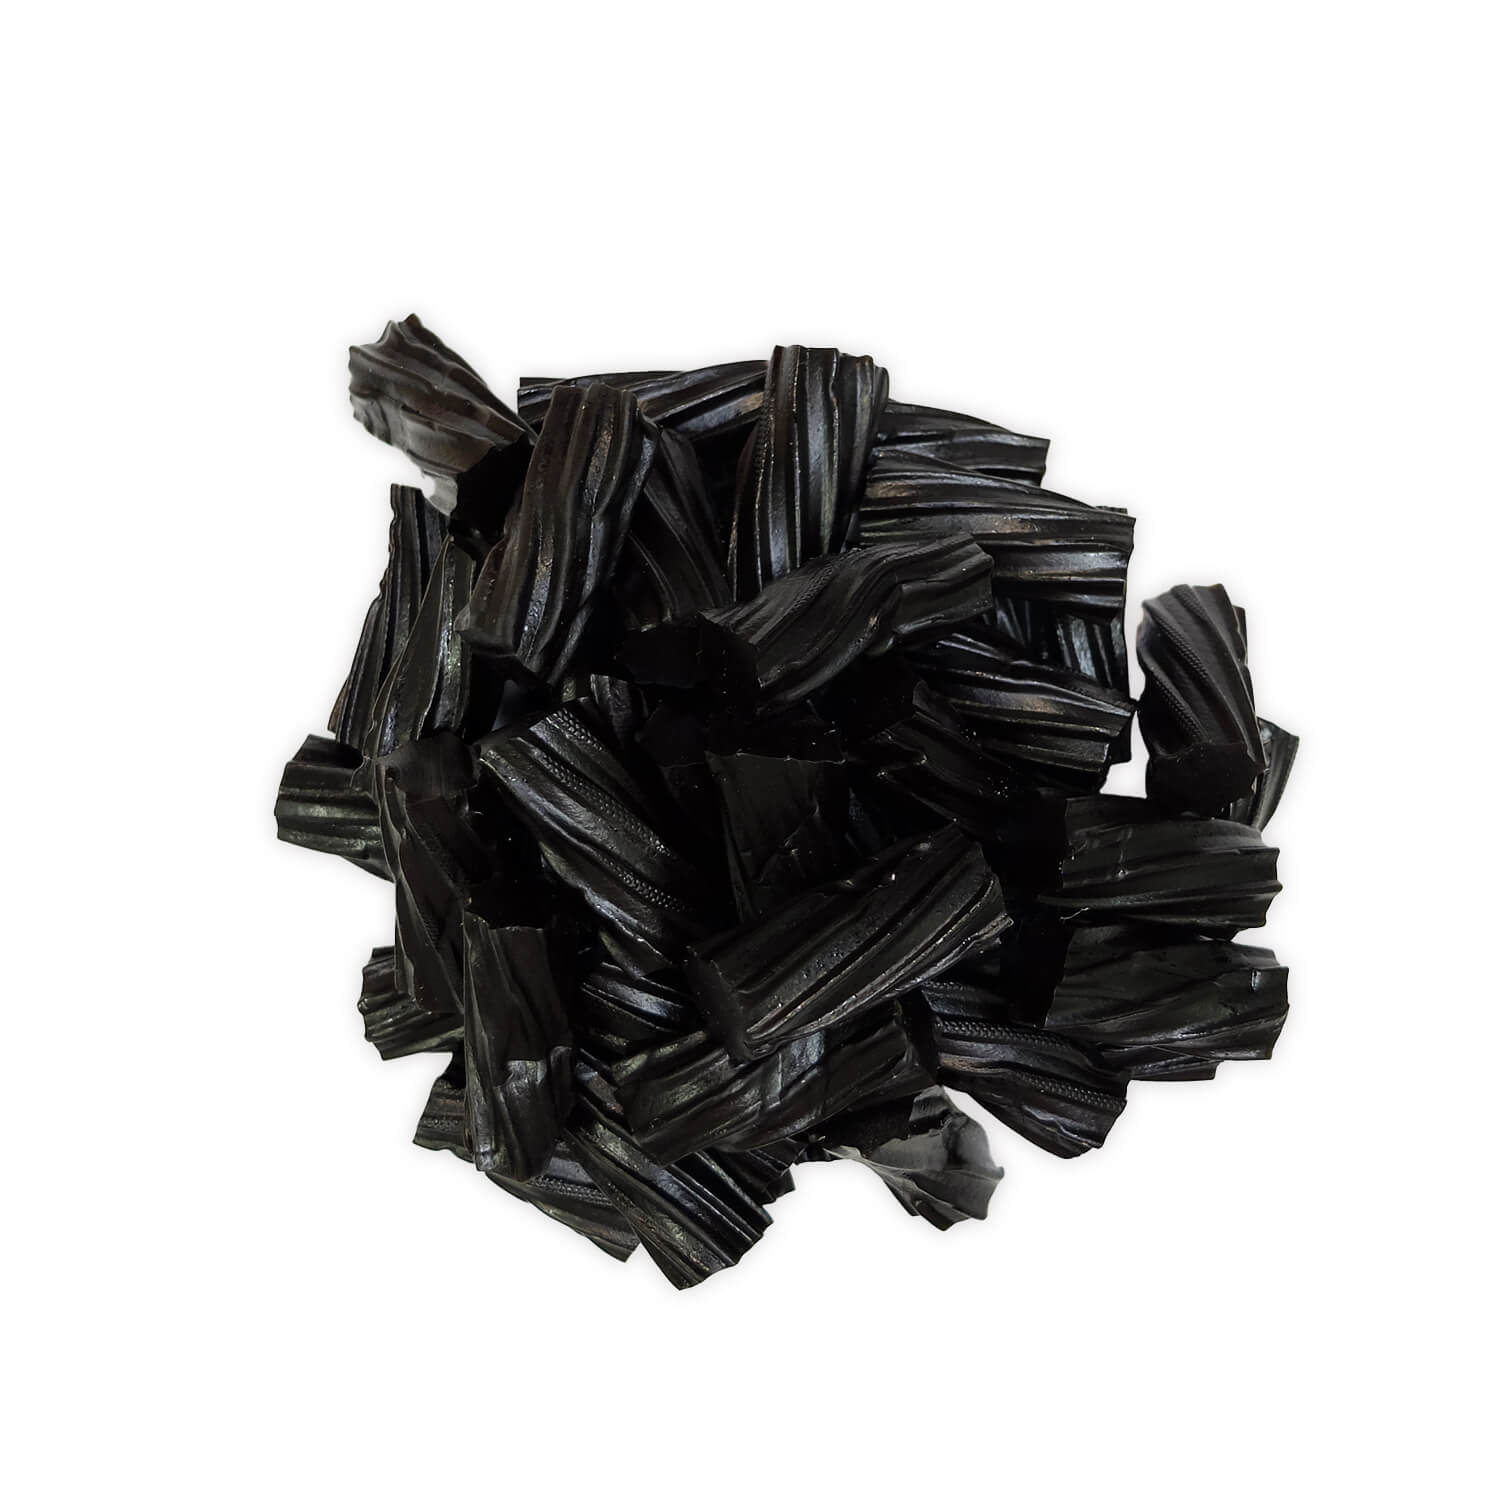 Gourmet black licorices